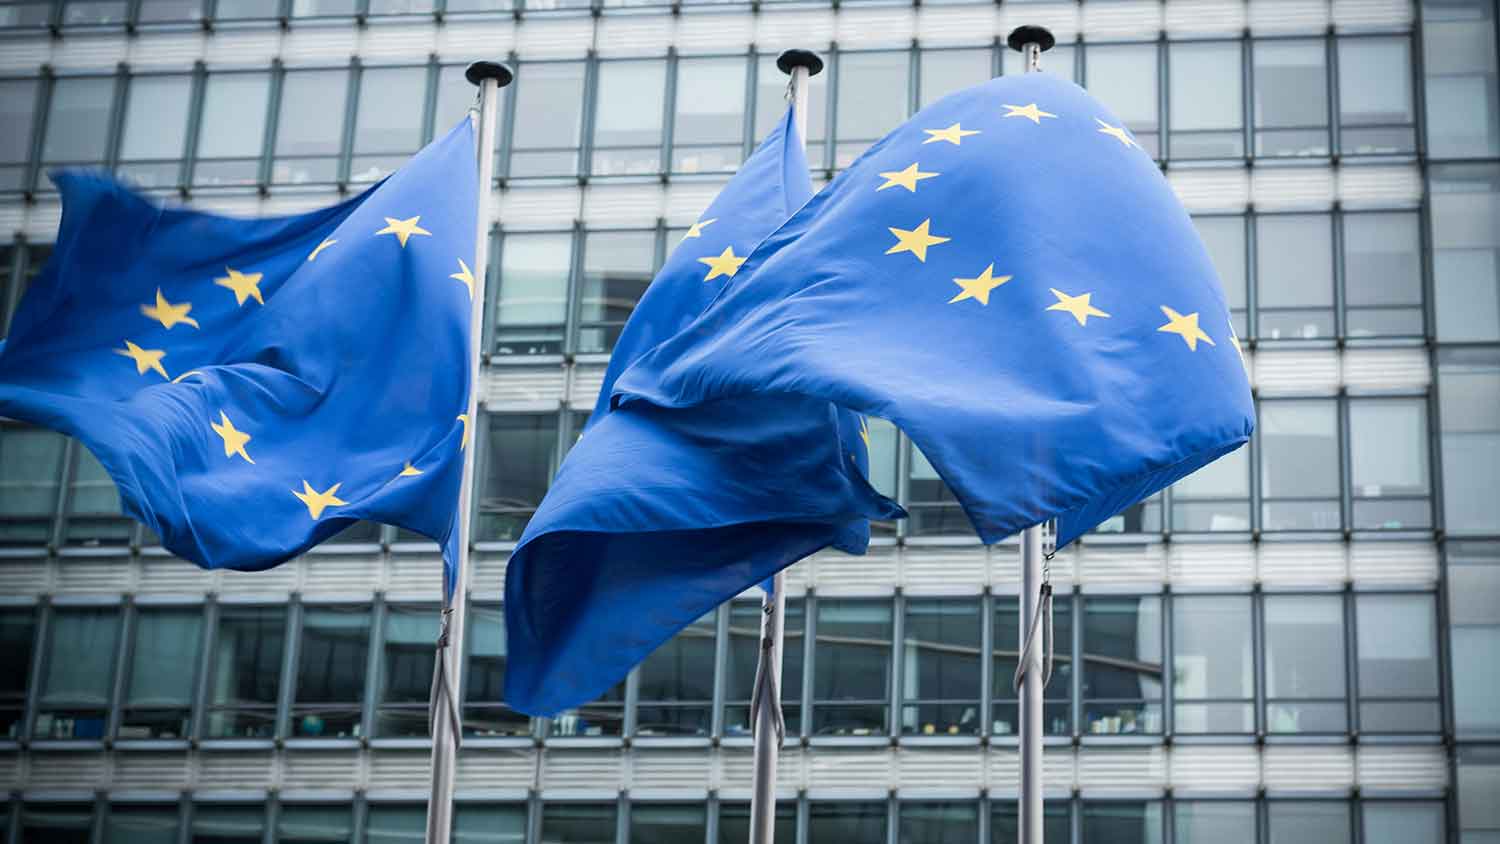 EU flags outside an official building